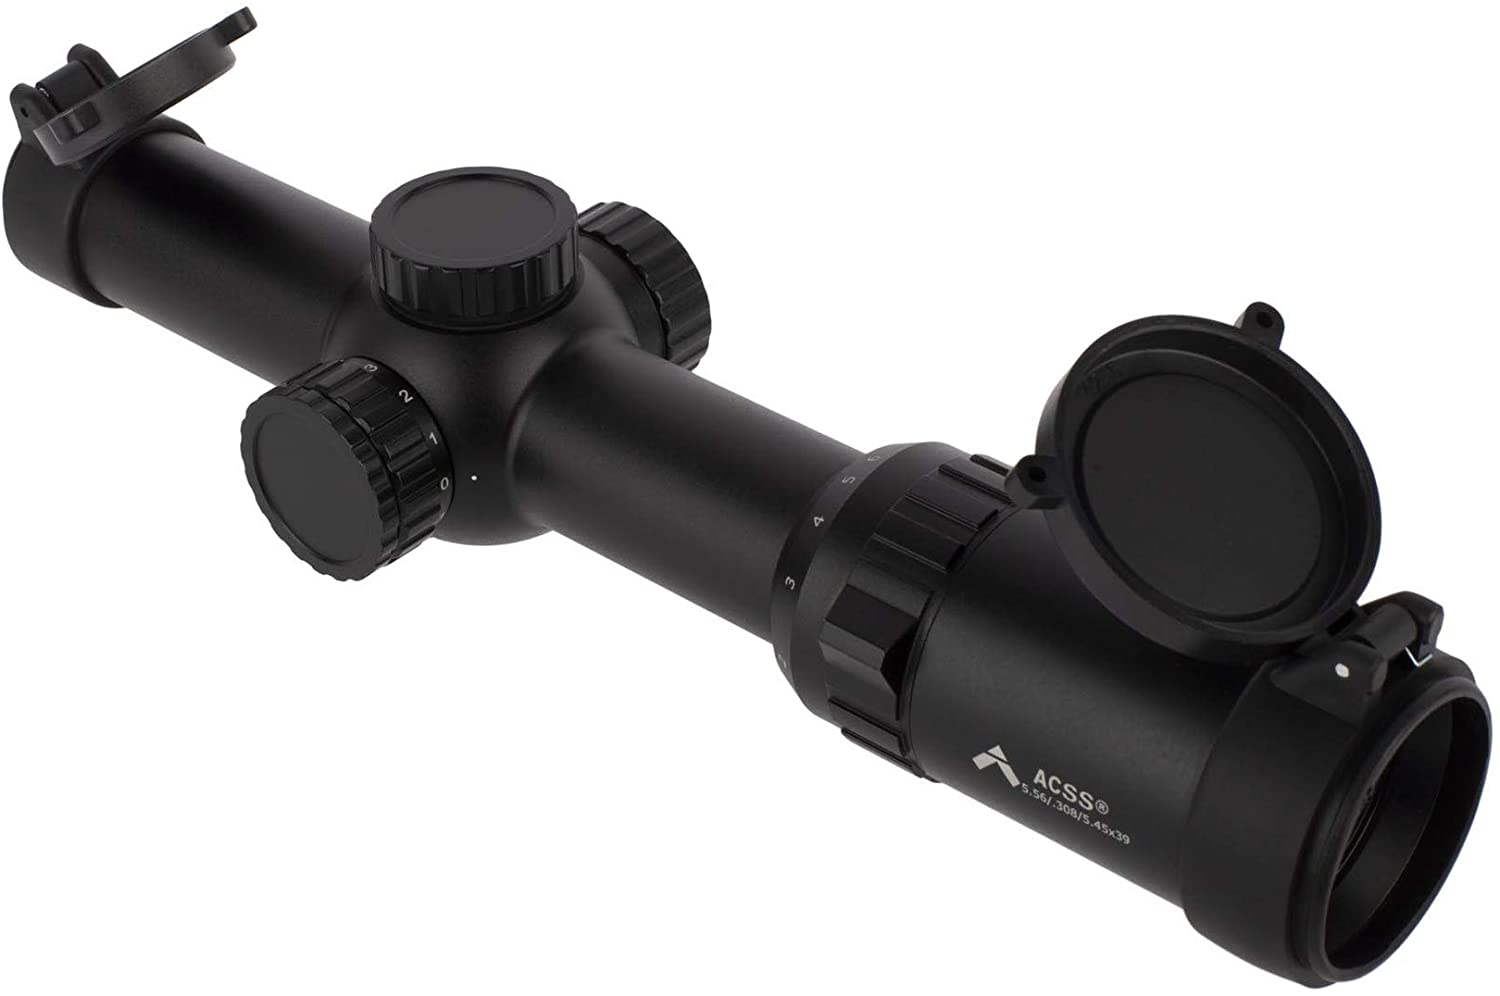 Primary Arms 1-6X24mm SFP Riflescope